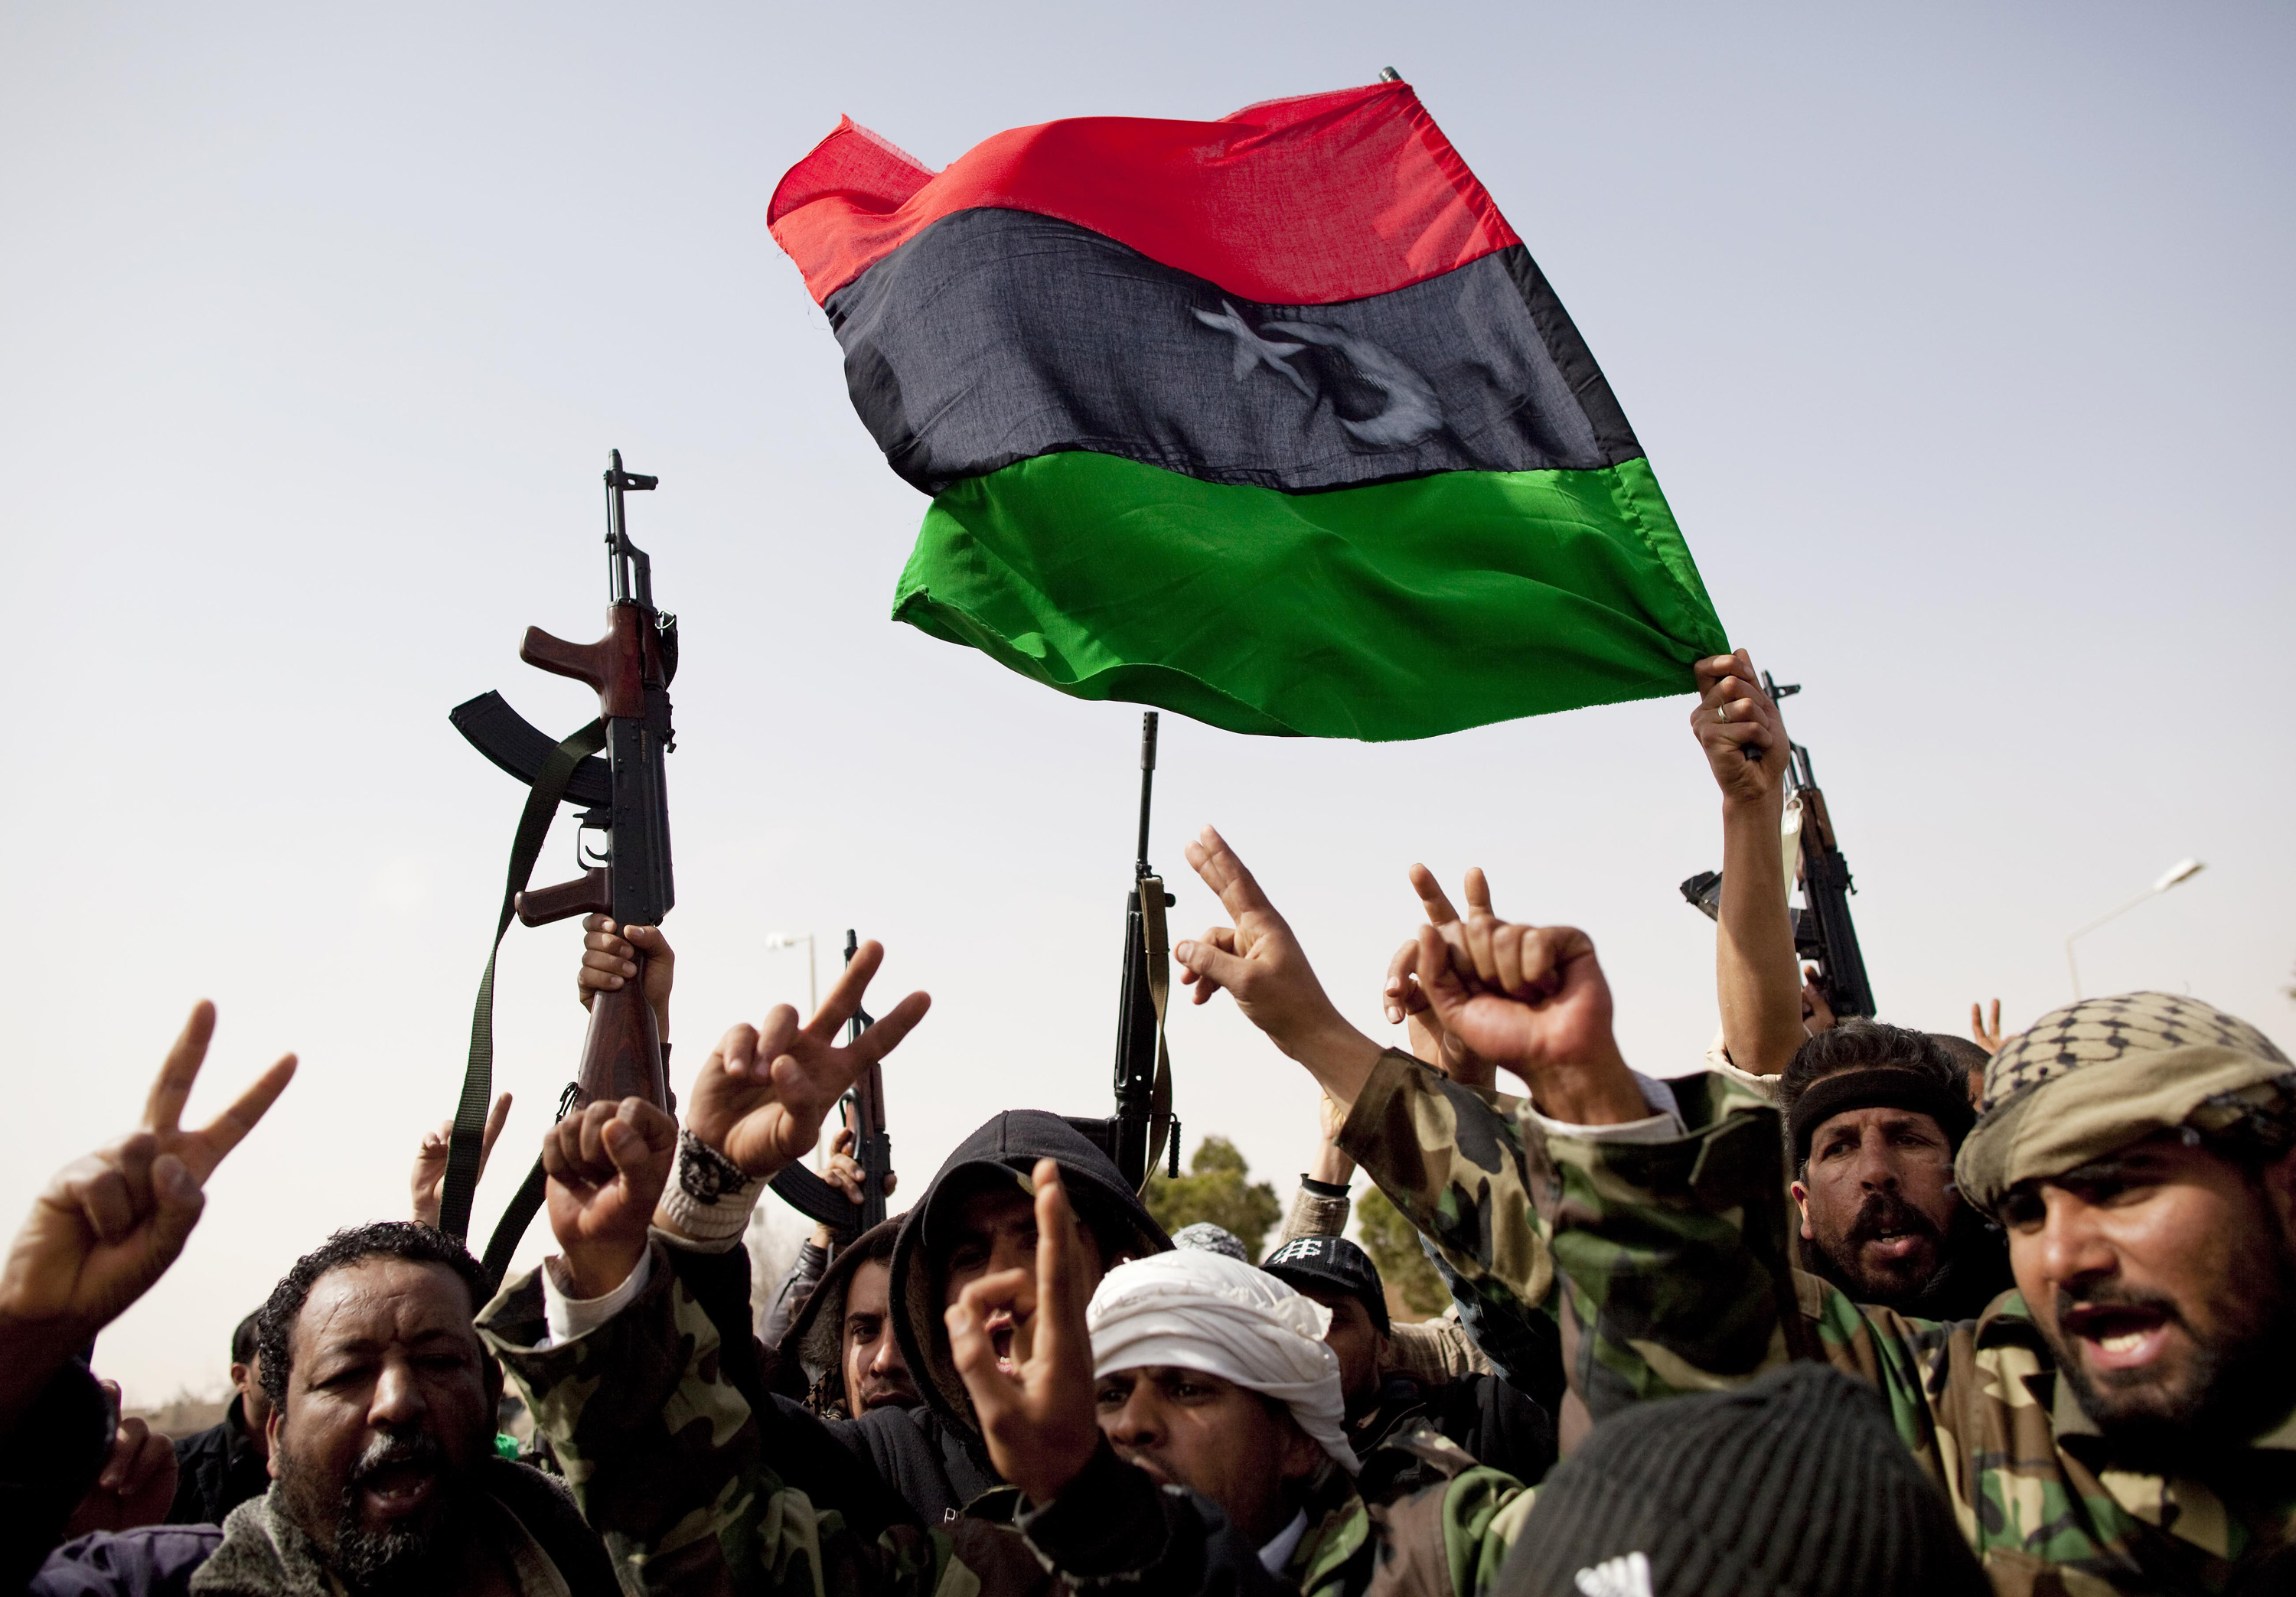 Militar, Kaos, Strider, Libyen, Blodbad, Uppror, Armé, Demonstration, Krig